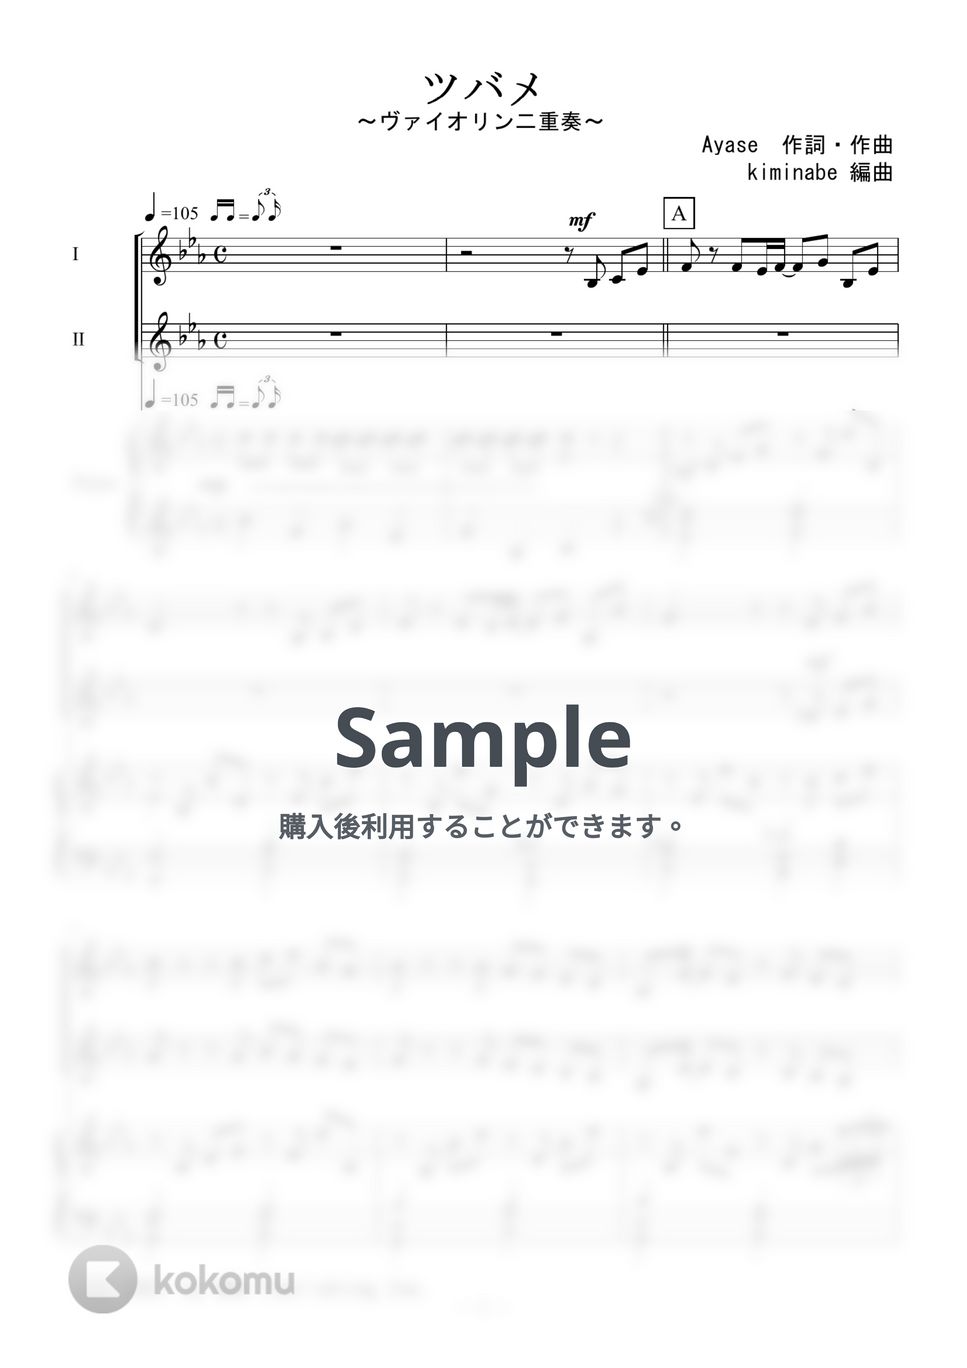 YOASOBI - ツバメ (ヴァイオリン二重奏) by kiminabe